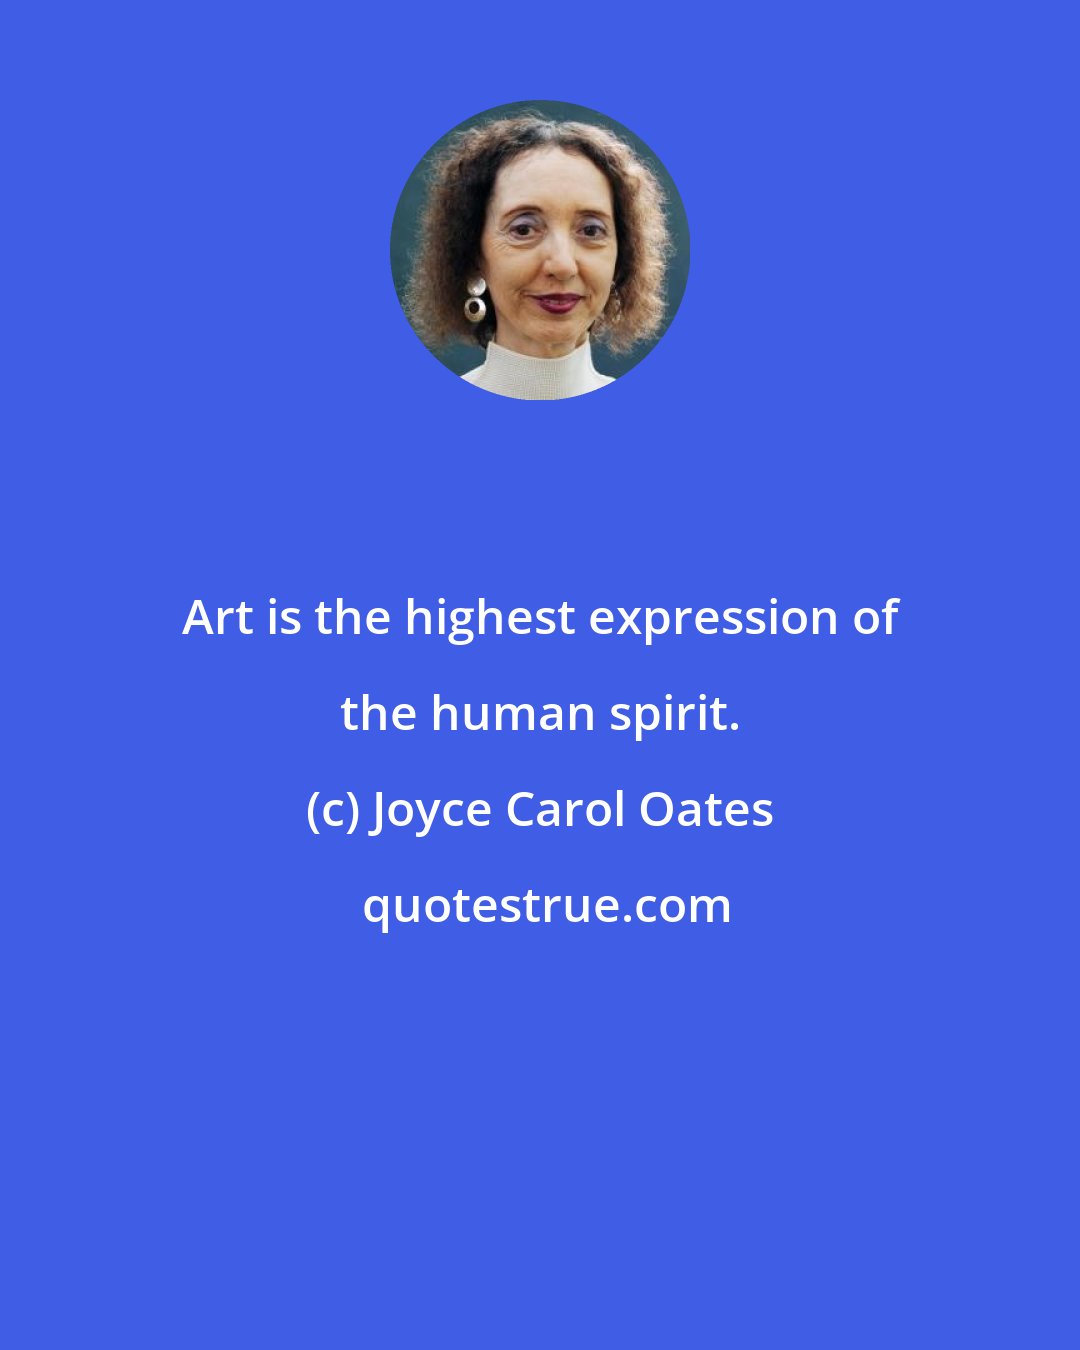 Joyce Carol Oates: Art is the highest expression of the human spirit.